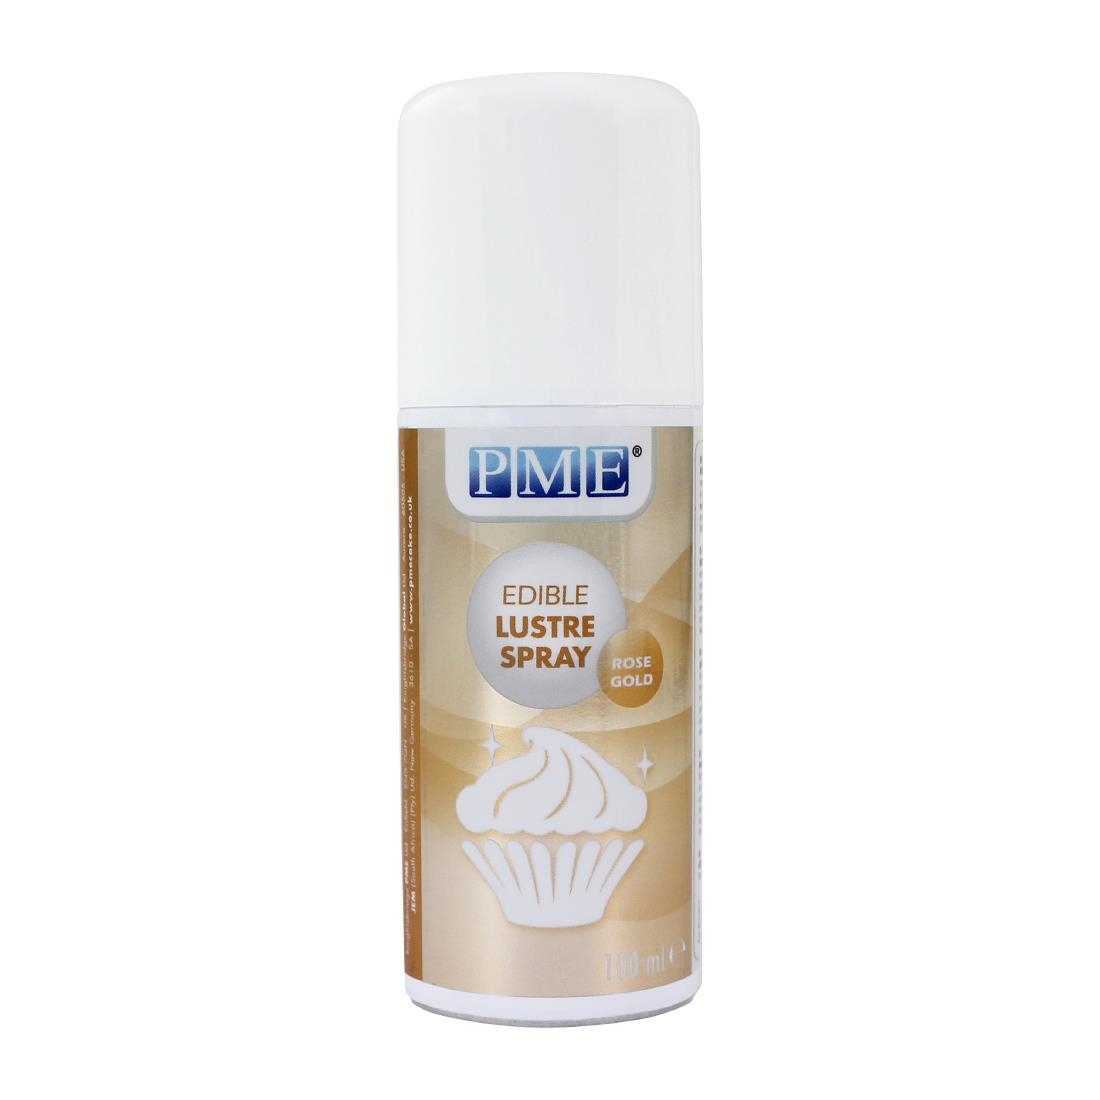 PME Edible Lustre Spray 100ml - Rose Gold (HU205)